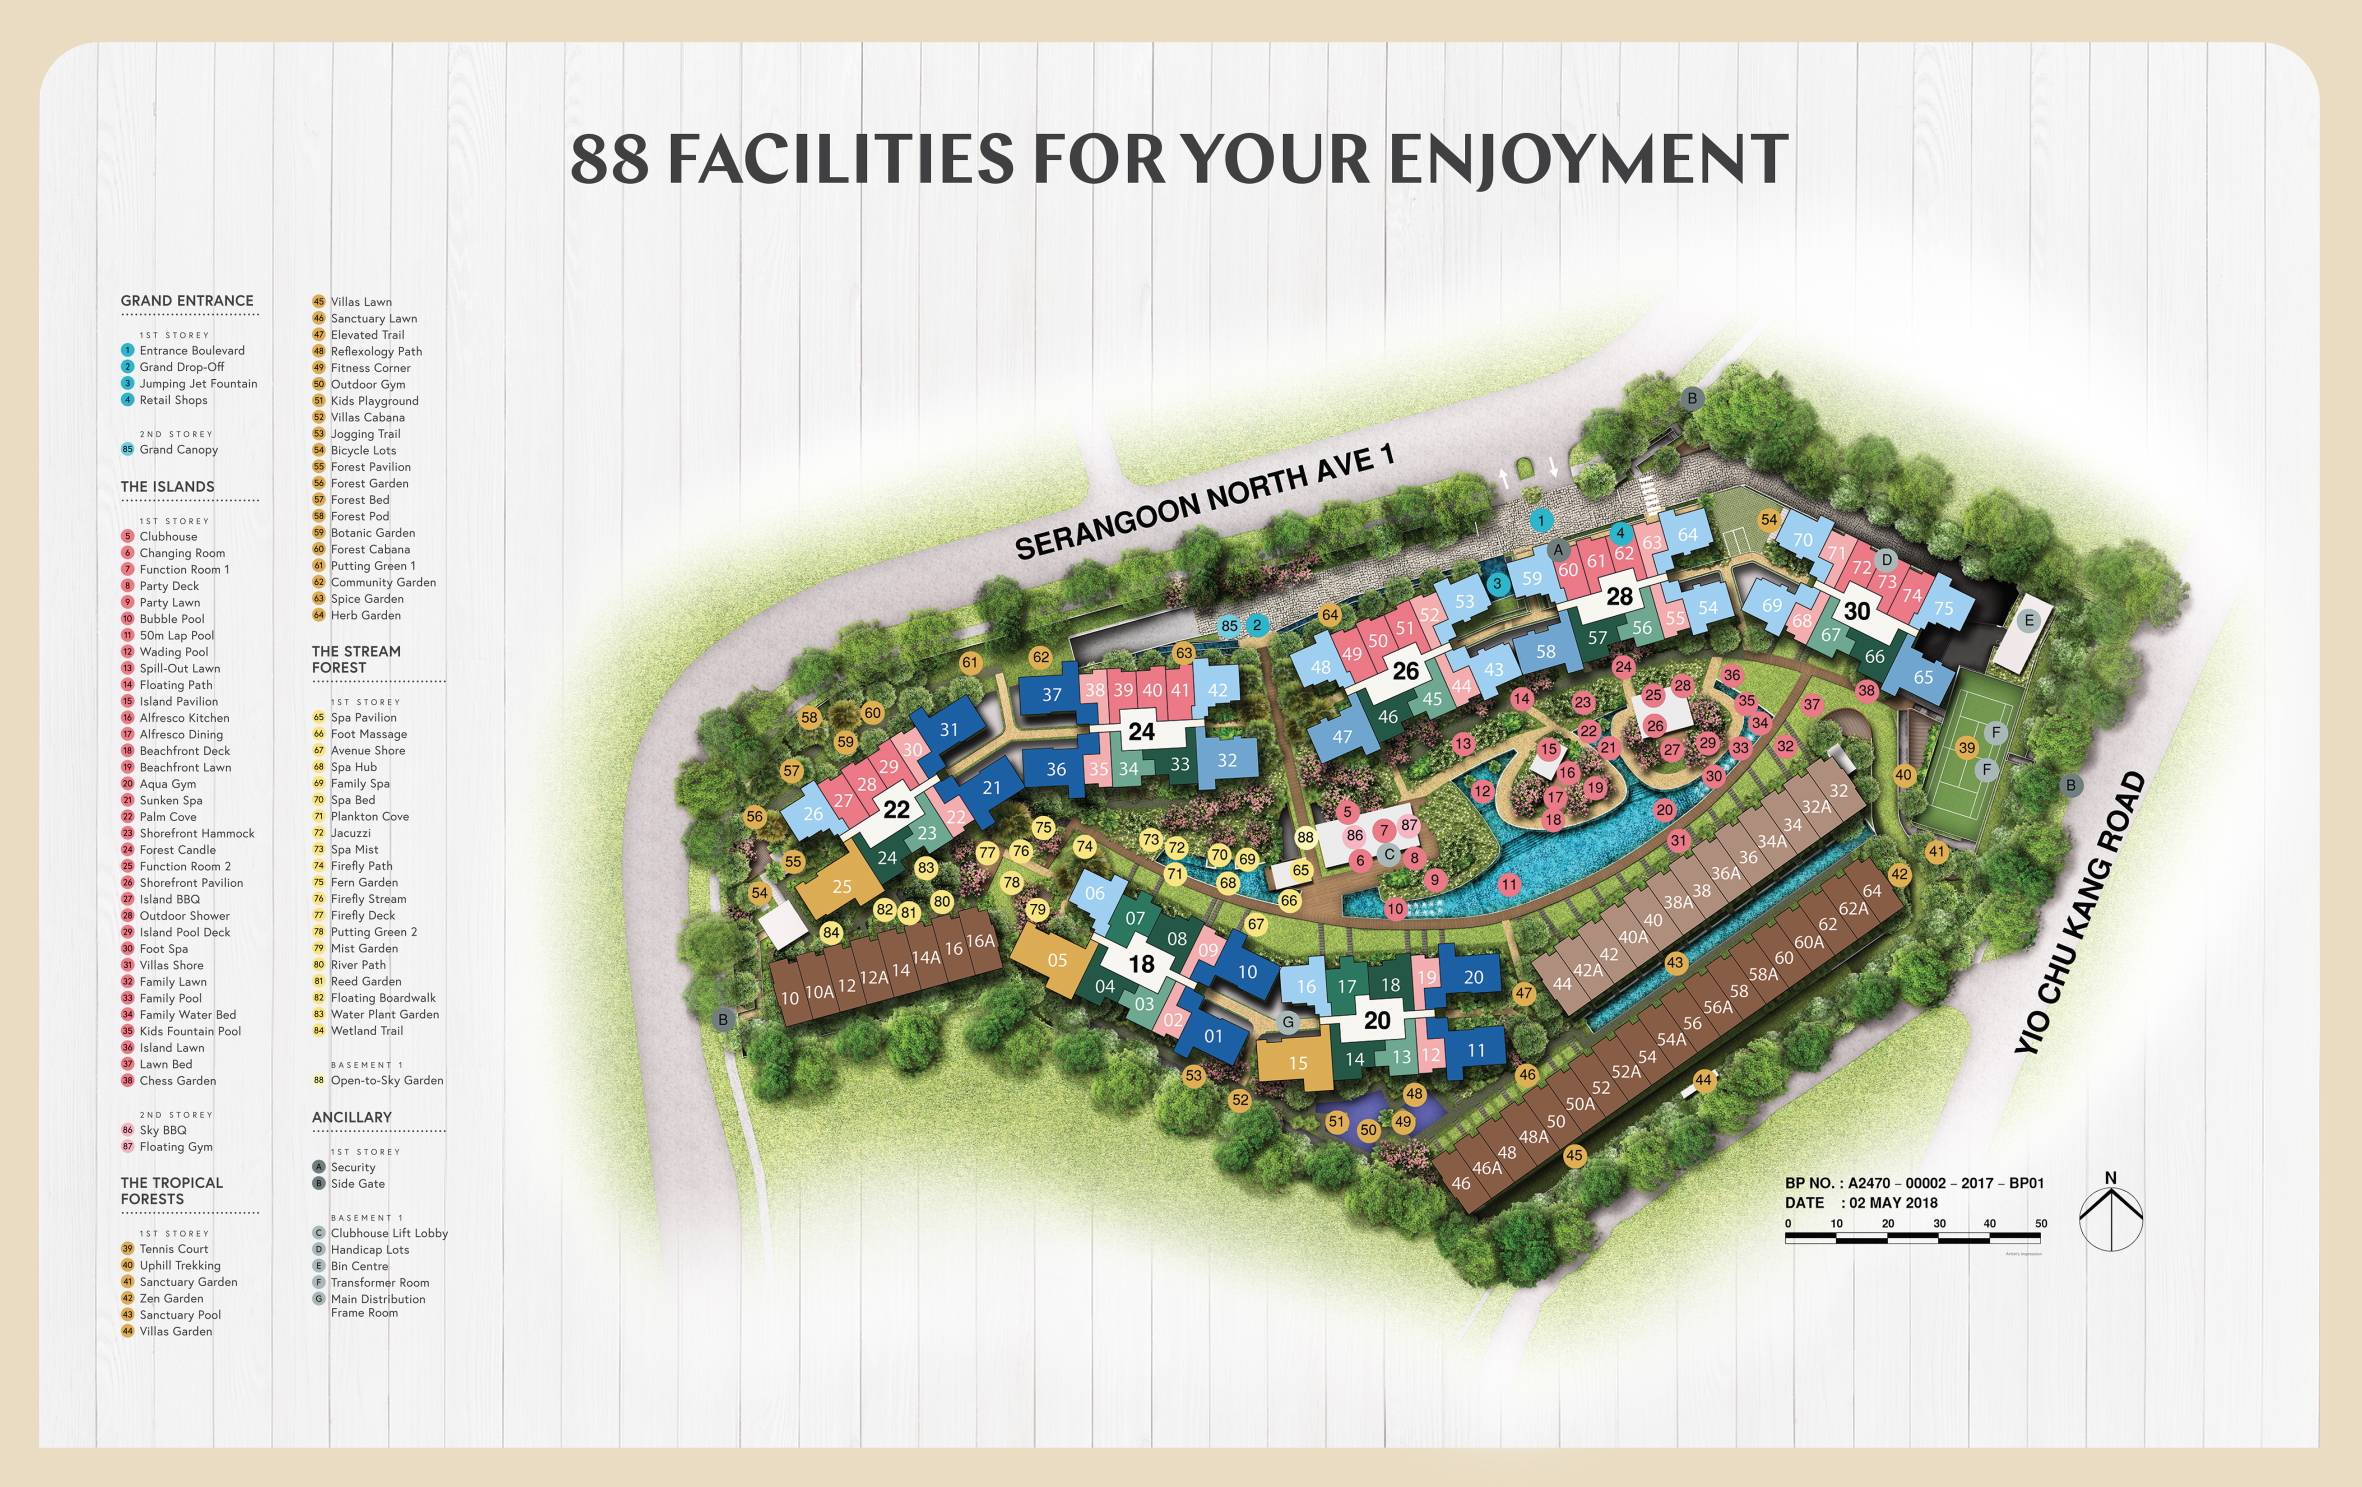 Affinity at Serangoon site plan